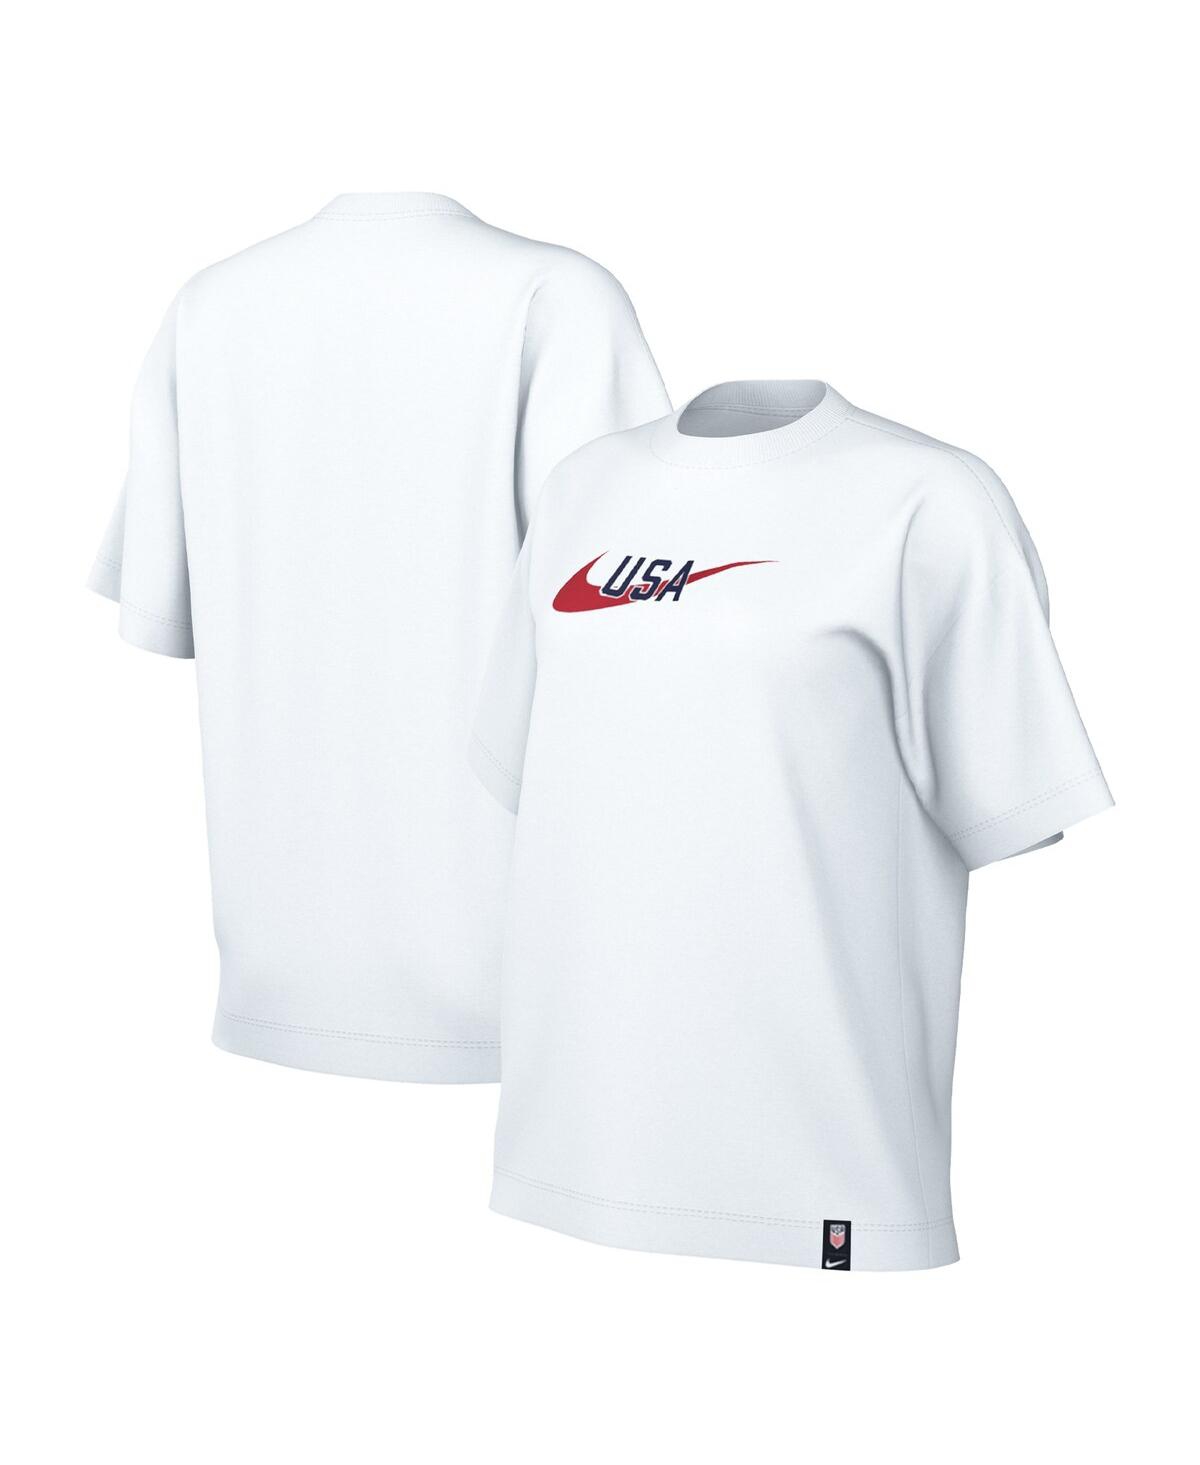 Nike Women's  White Usmnt Swoosh T-shirt